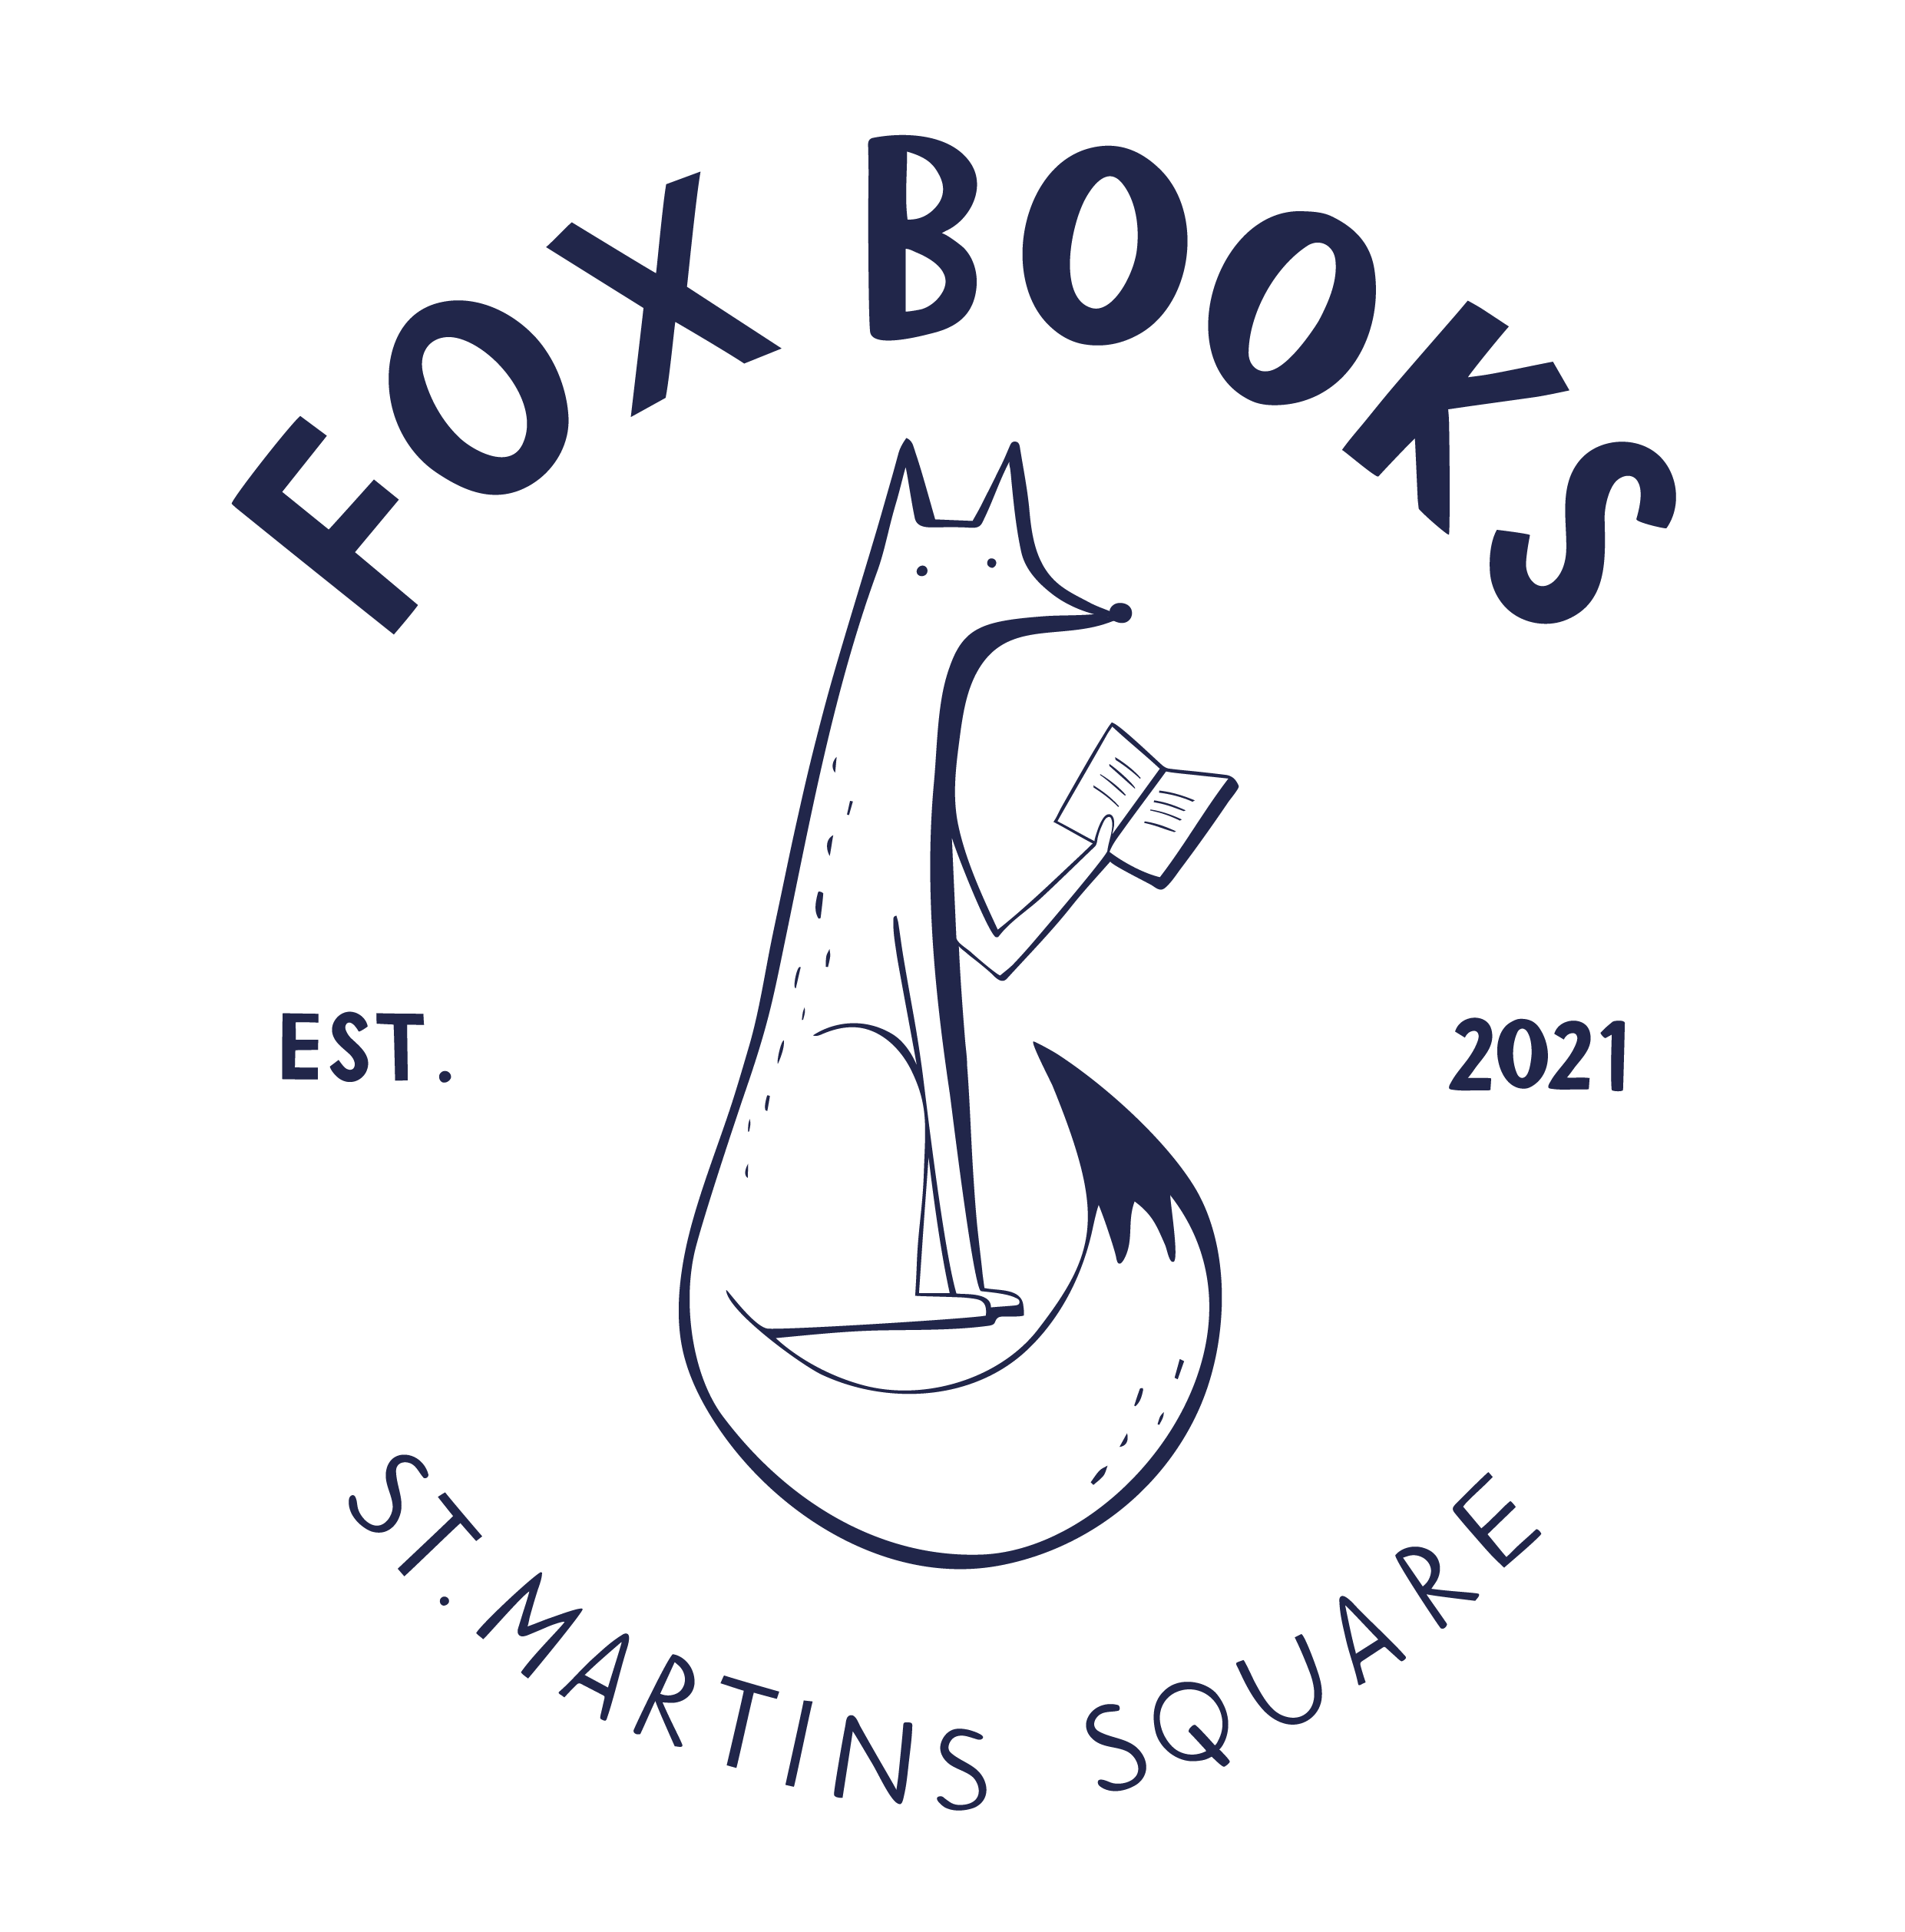 Fox Books